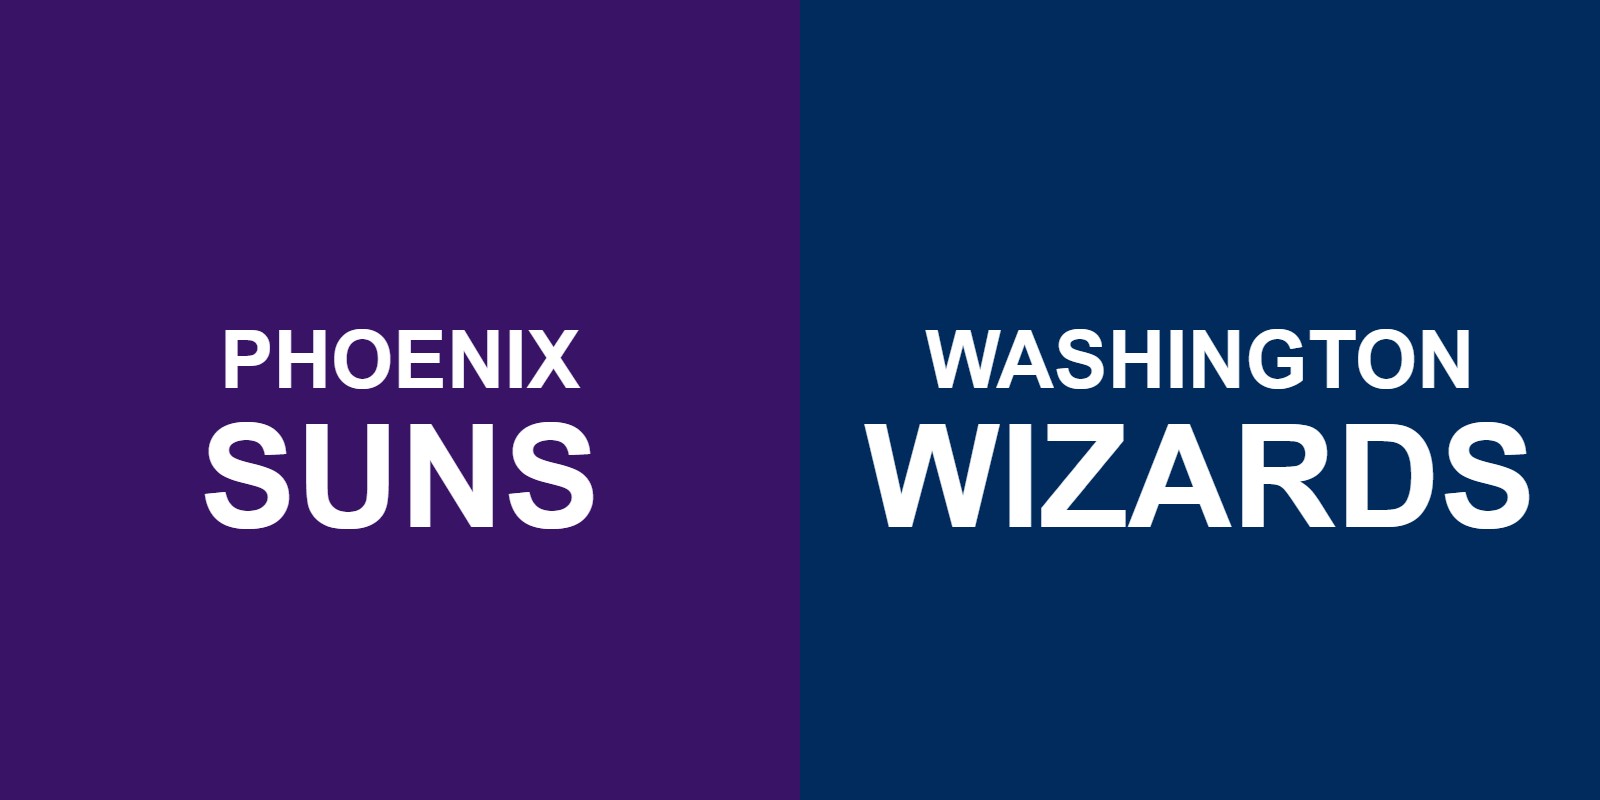 Suns vs Wizards